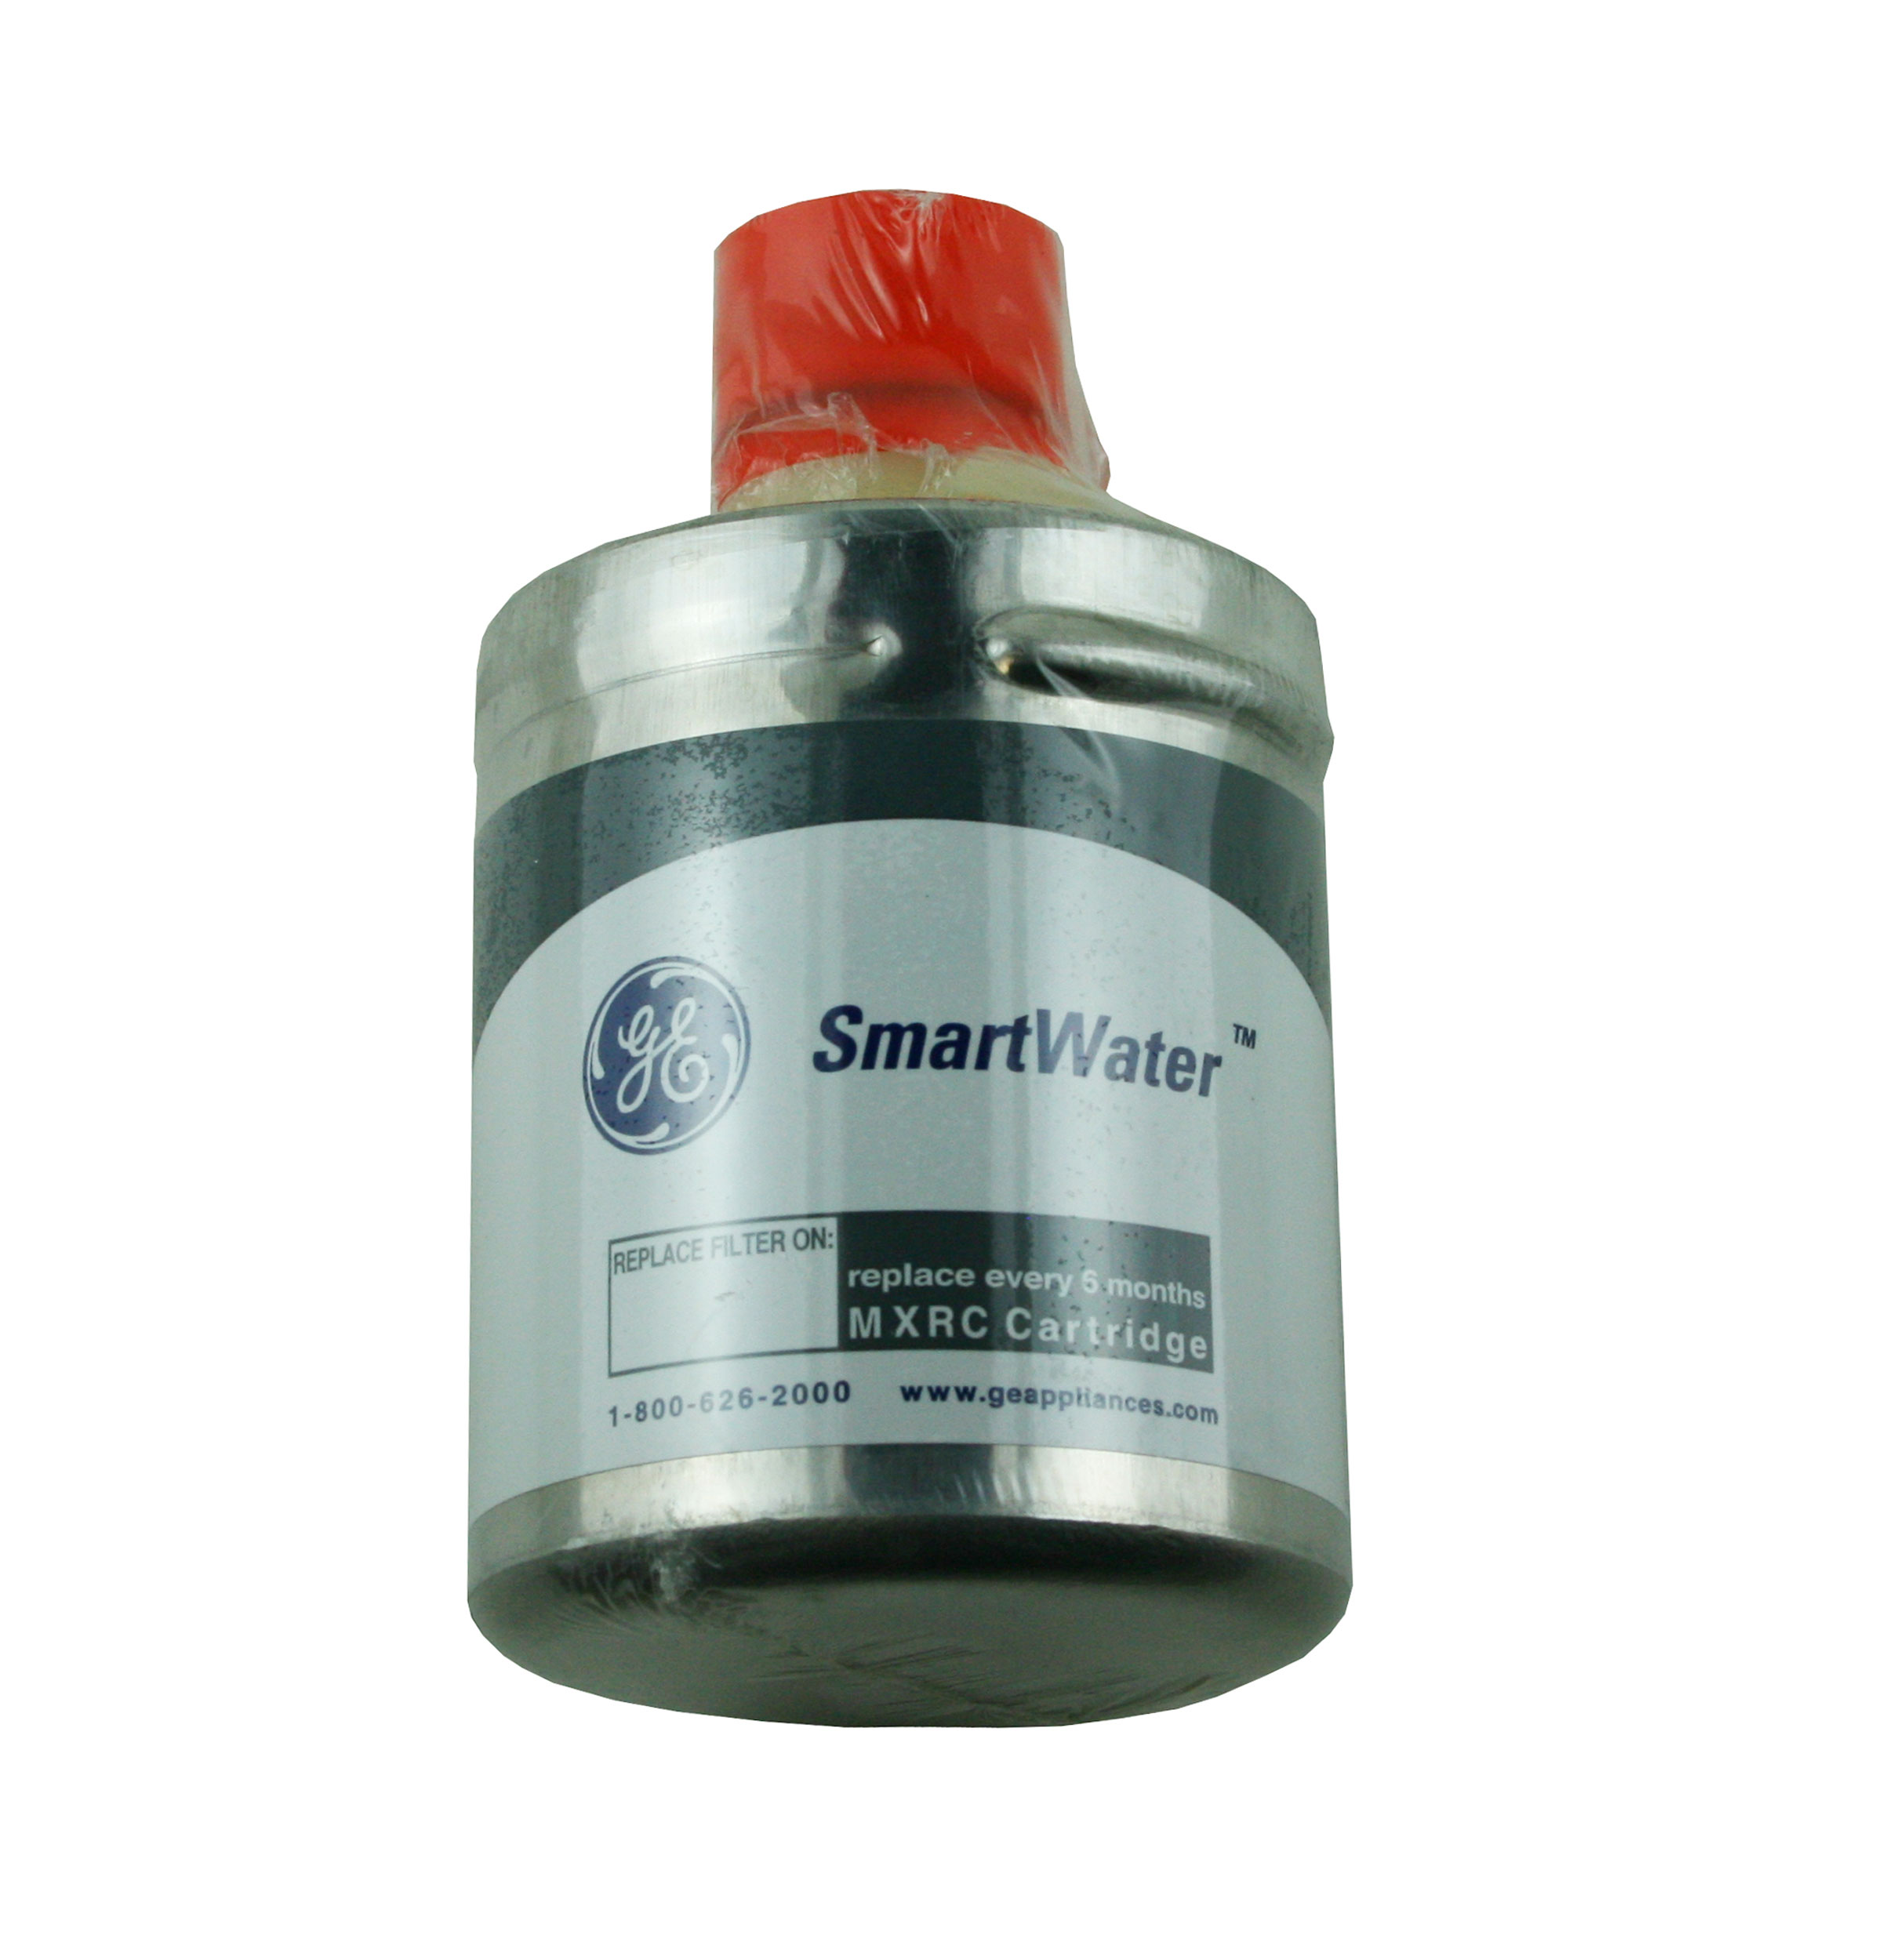 GE SmartWater Replacement Water Filter — Model #: MXRC